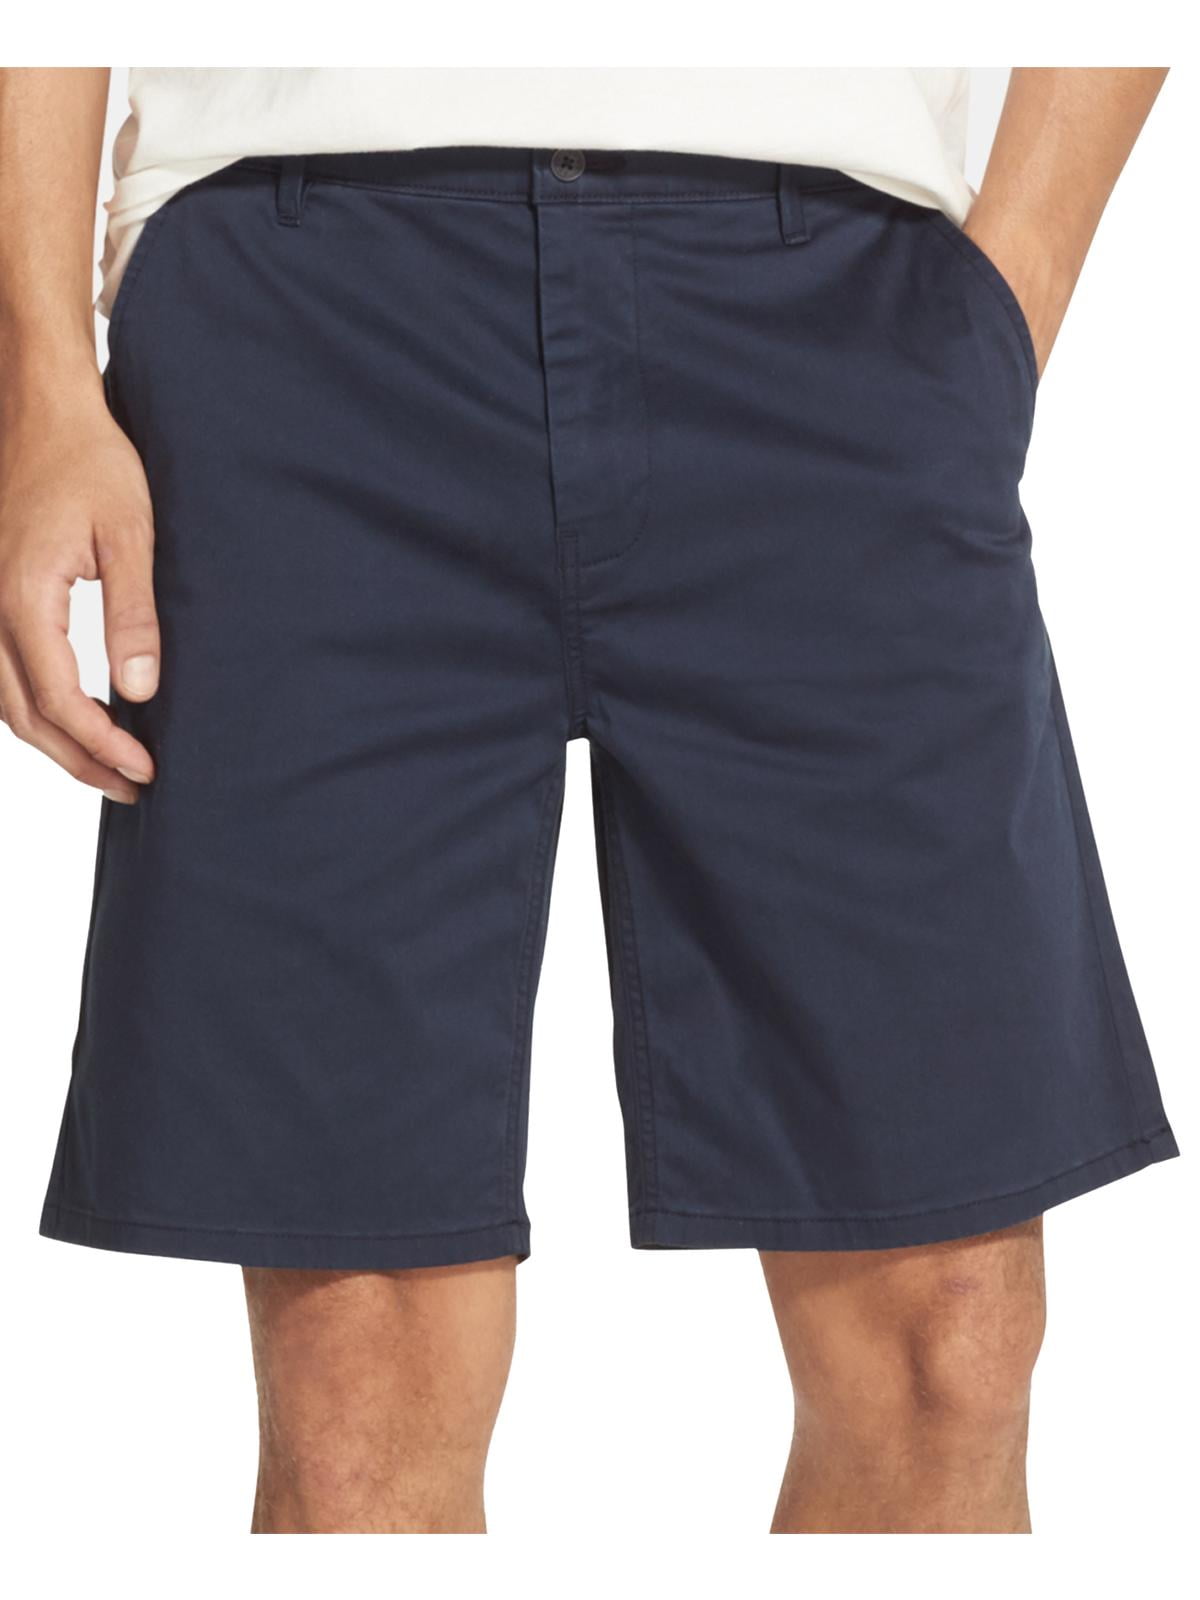 DKNY Mens Twill Stretch Khaki, Chino Shorts Navy 34 - Walmart.com